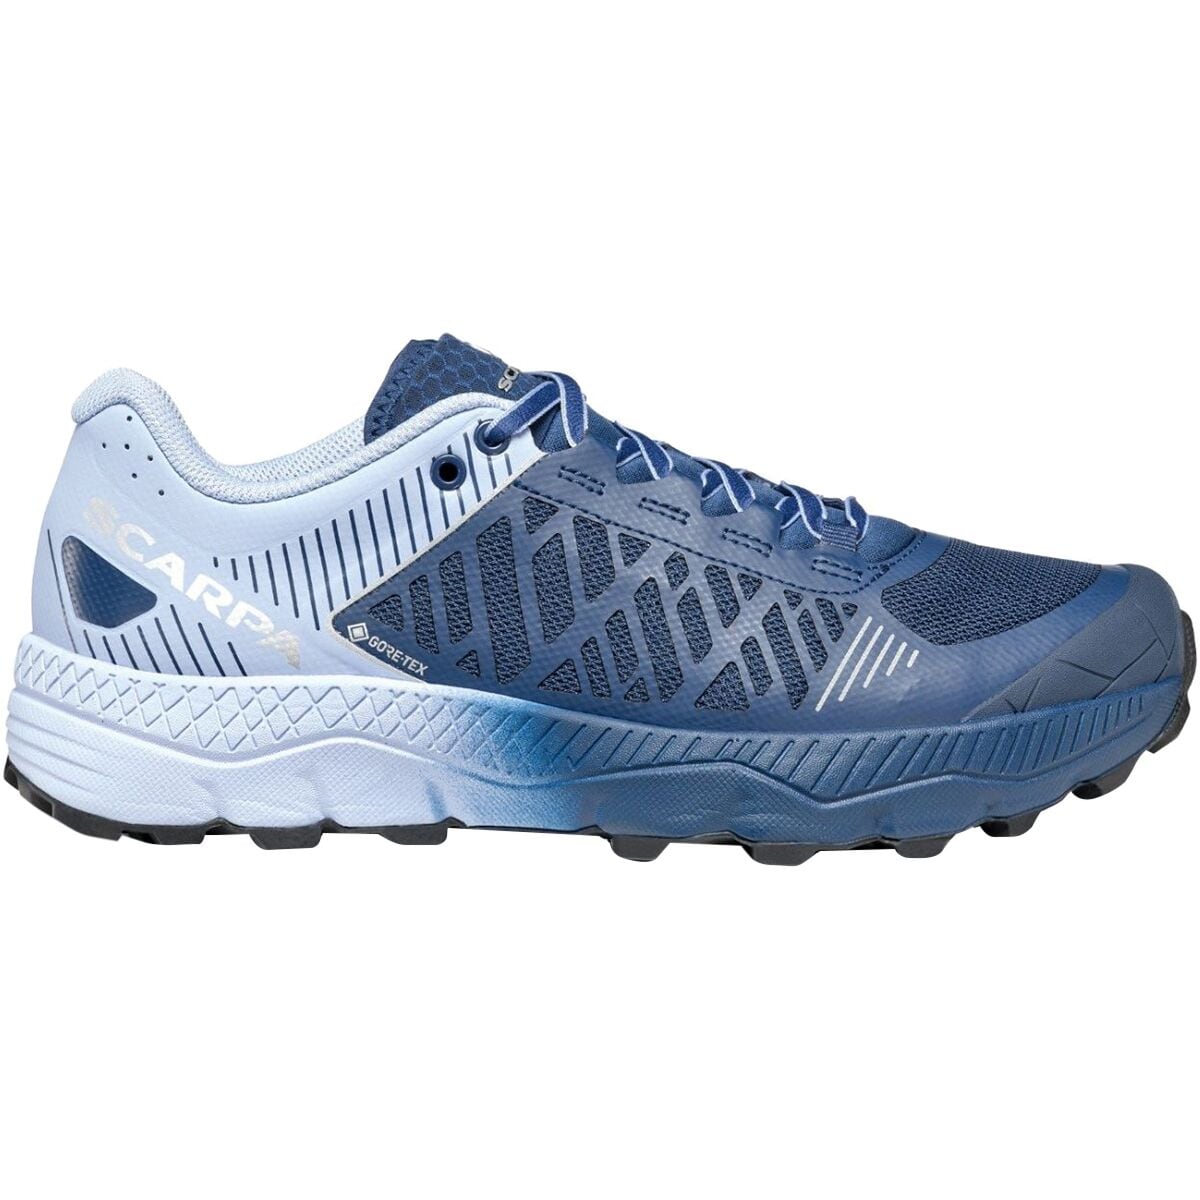 Spin Ultra GTX Trail Running Shoe - Women